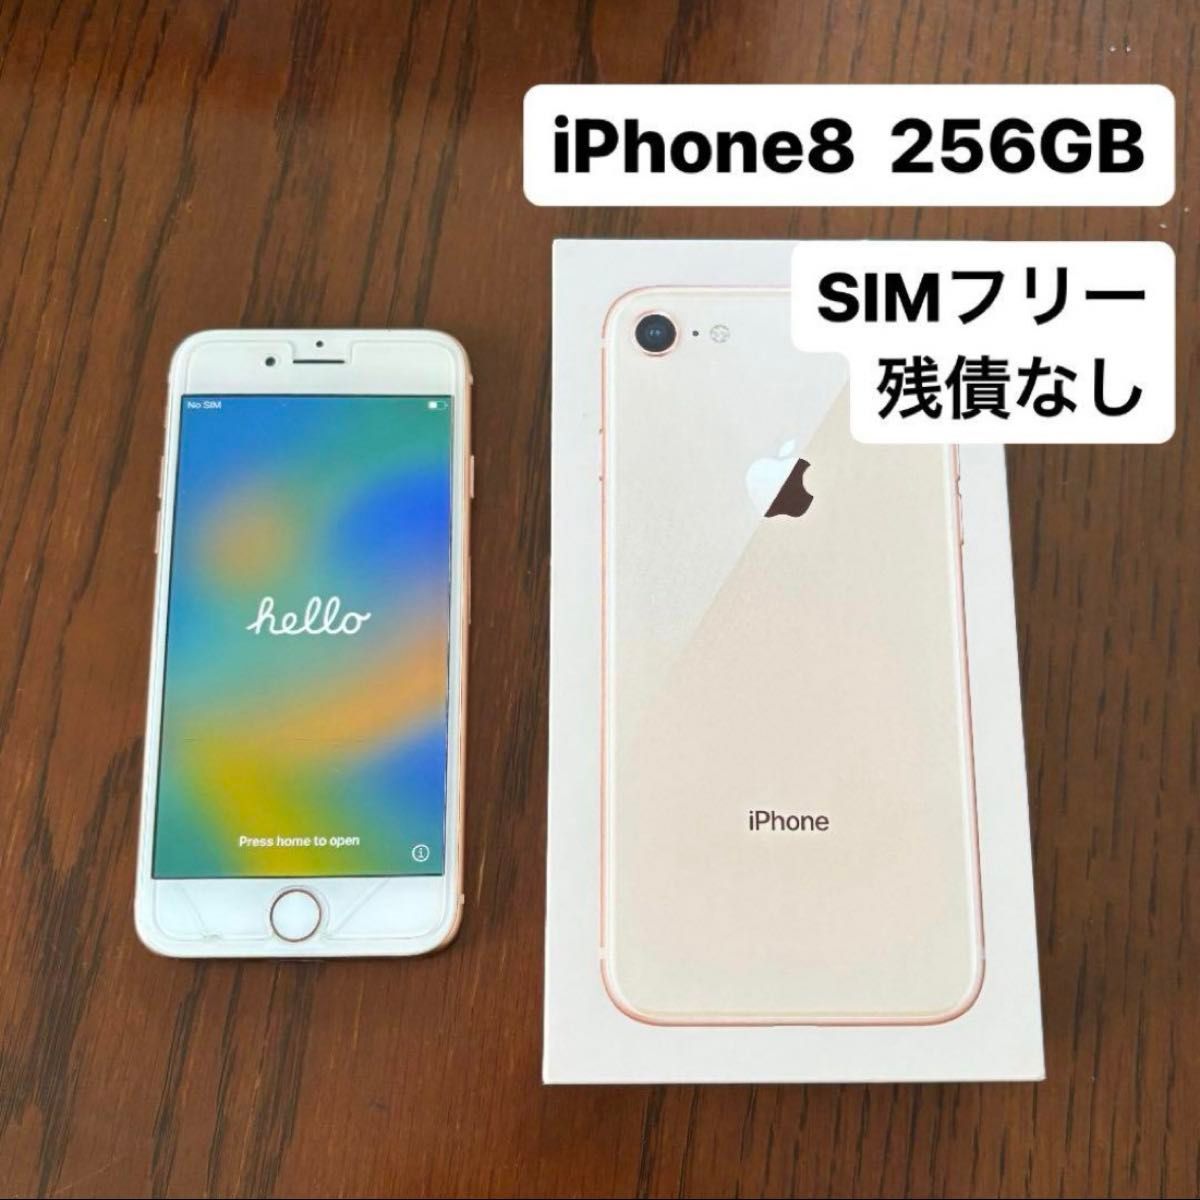 iPhone 8 ゴールド 256 GB SIMフリー - スマートフォン本体